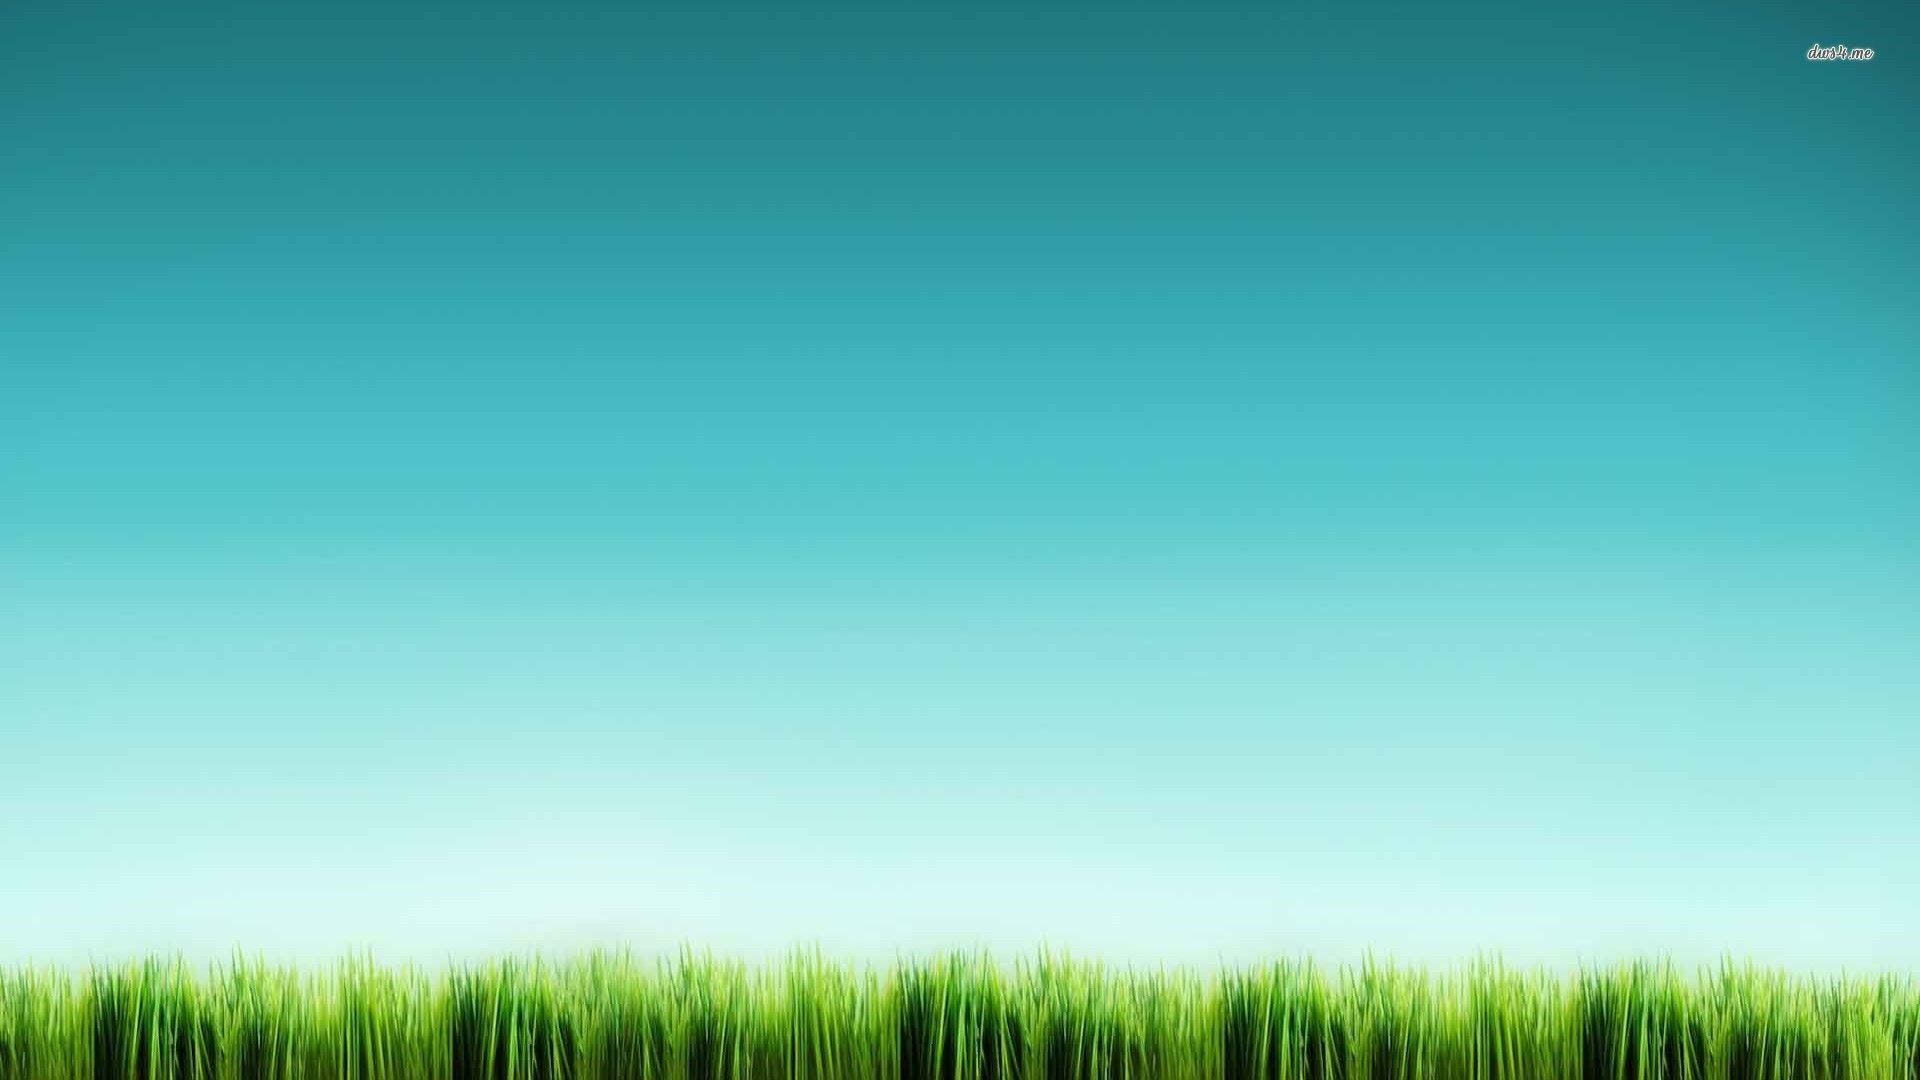 1920x1080 Grass Sky hình nền